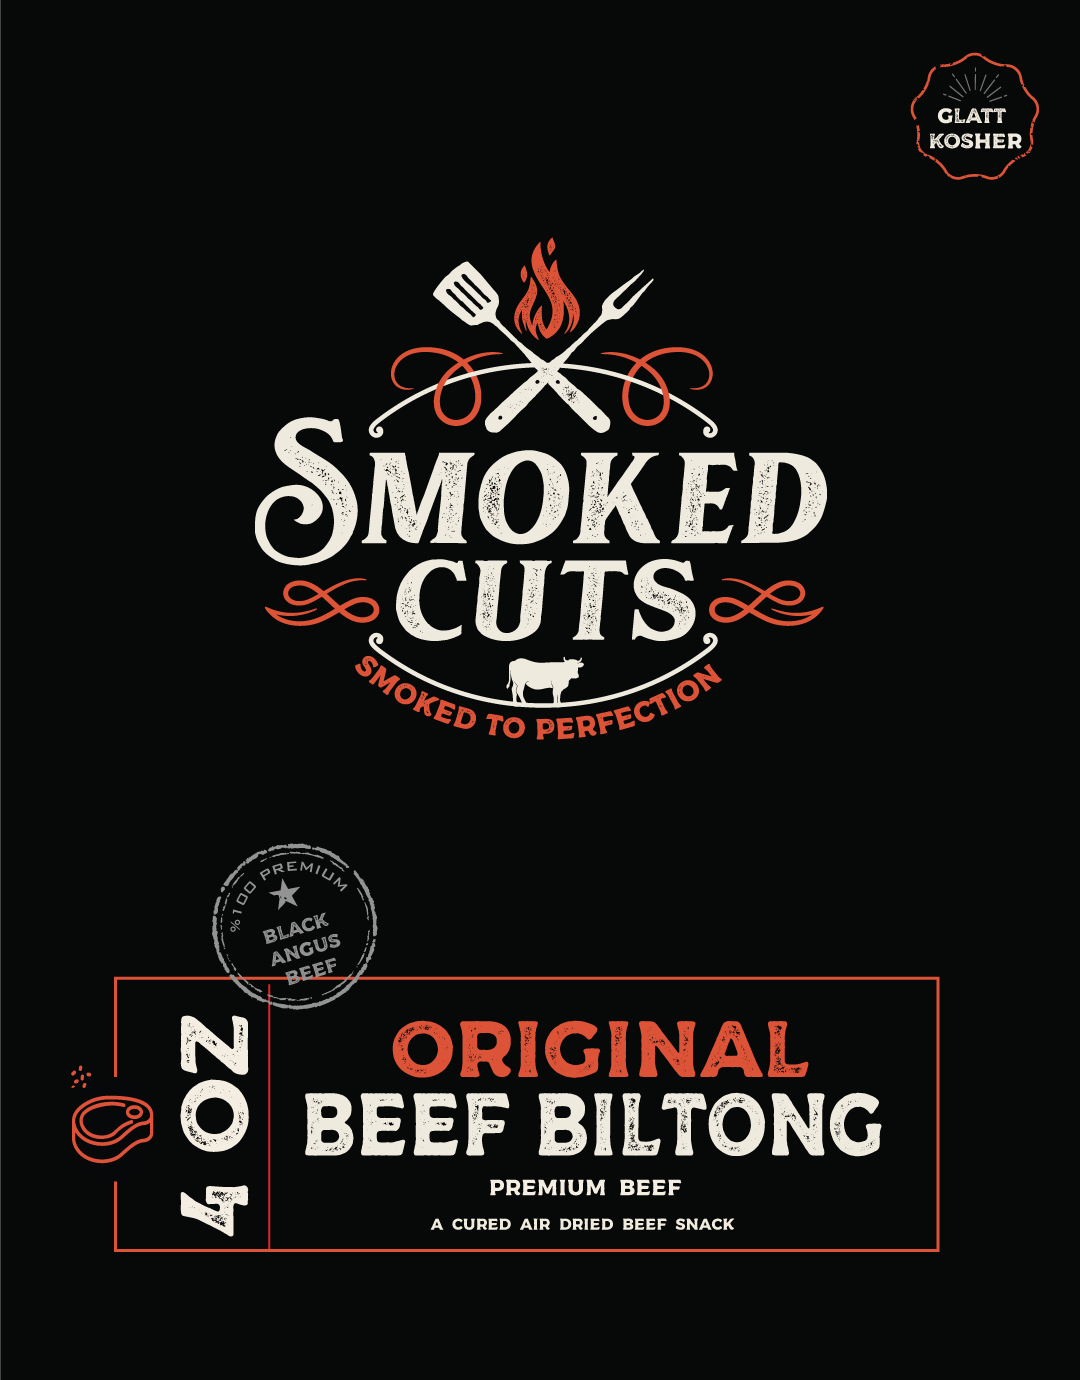 Original Flavor Beef Biltong – Smoked Cuts